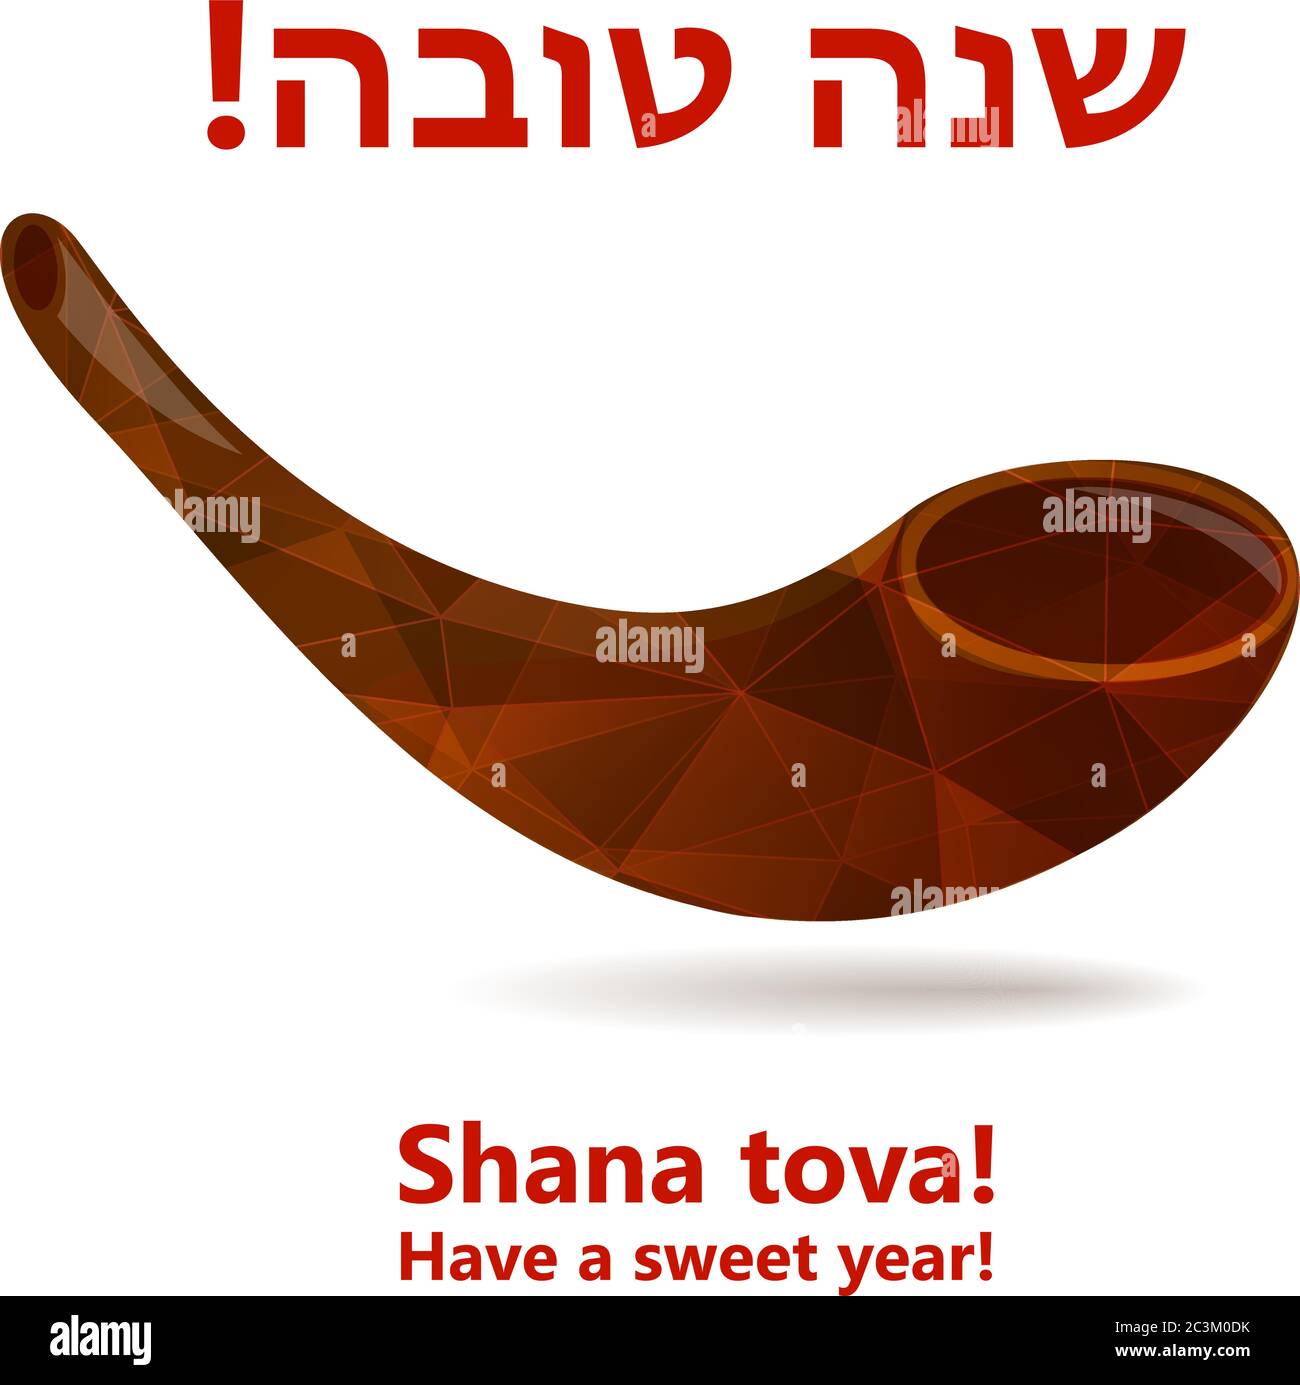 Rosh hashana card - Jewish New Year. Greeting text Shana tova on Hebrew - Have a sweet year. Pomegranate vector illustration. Stock Vector